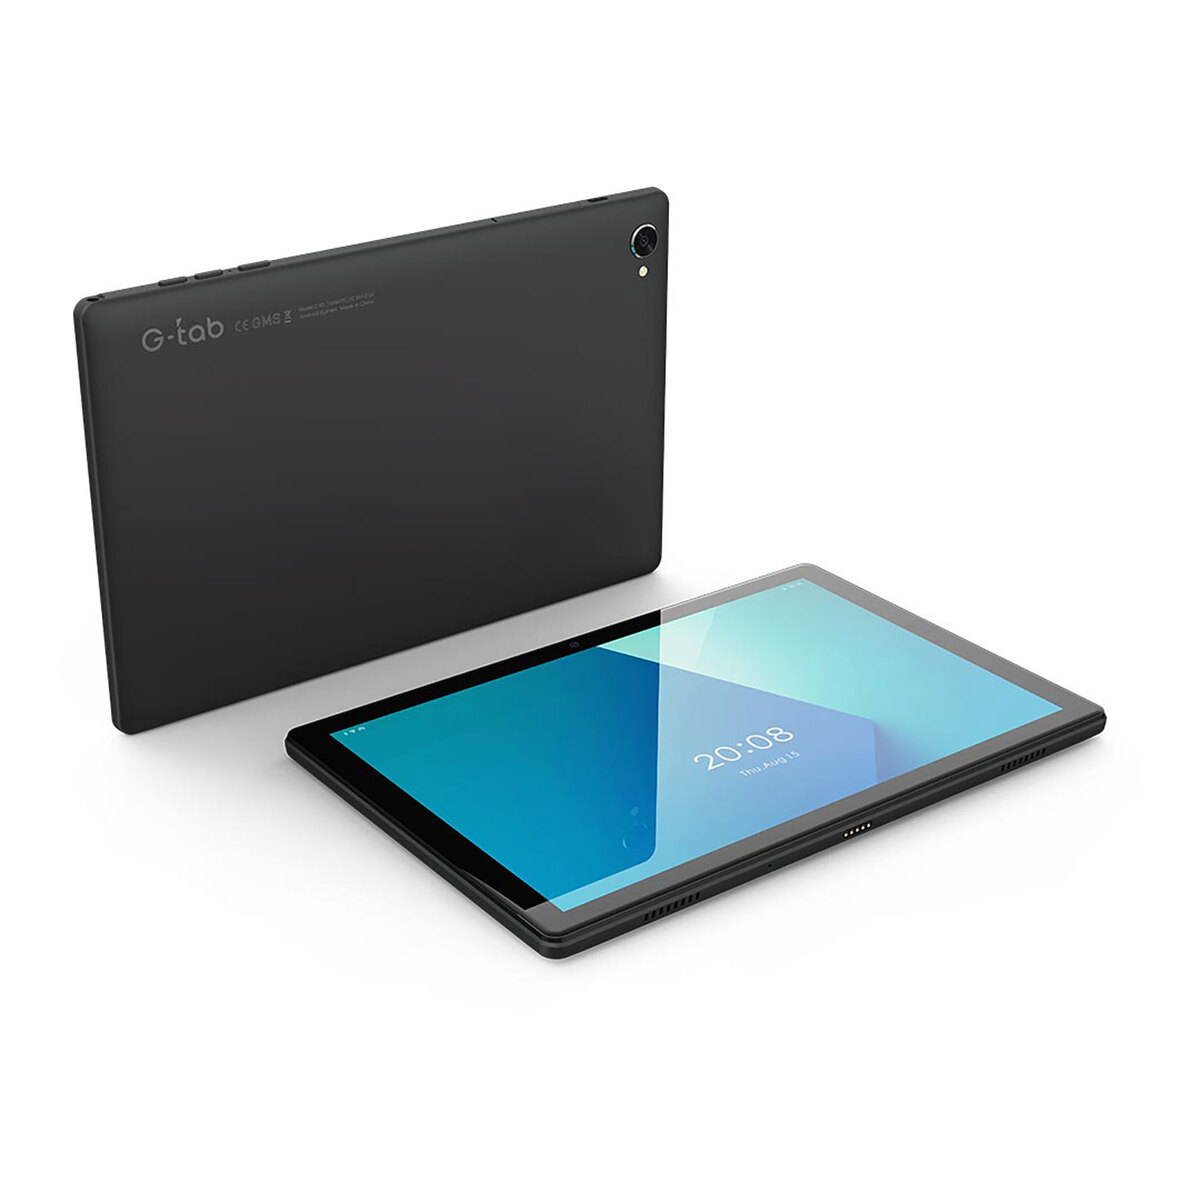 Gtab Tablet C10 PRO,4GB RAM,64GB Memory,Wi-Fi,10" Display